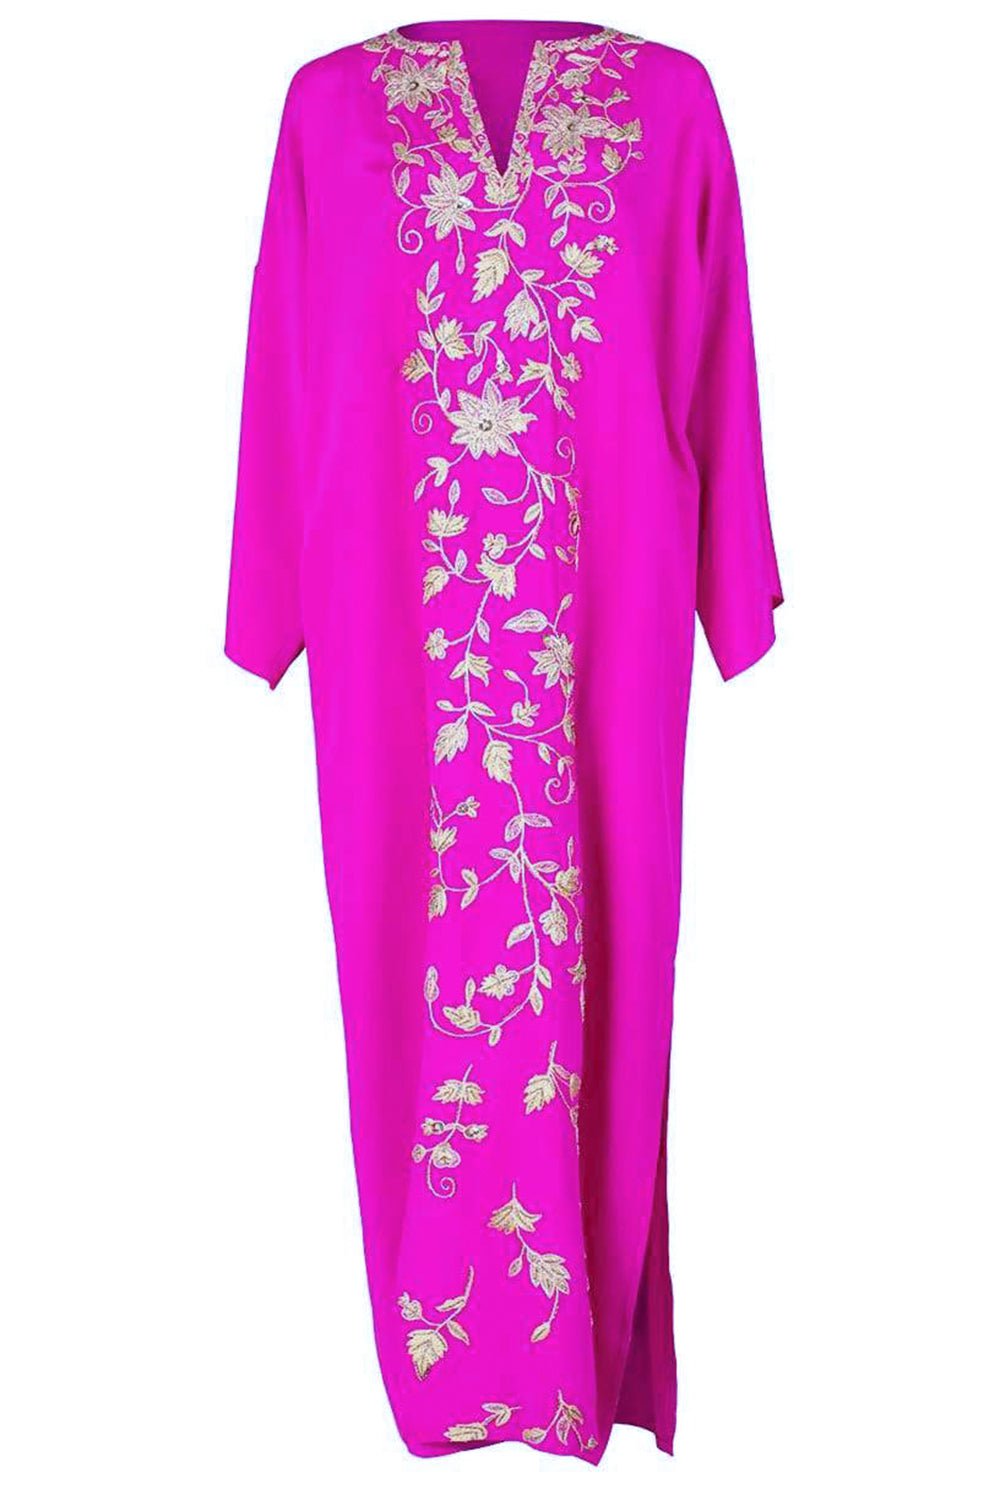 OSCAR DE LA RENTA-Embellished Silk Caftan Dress-PINK